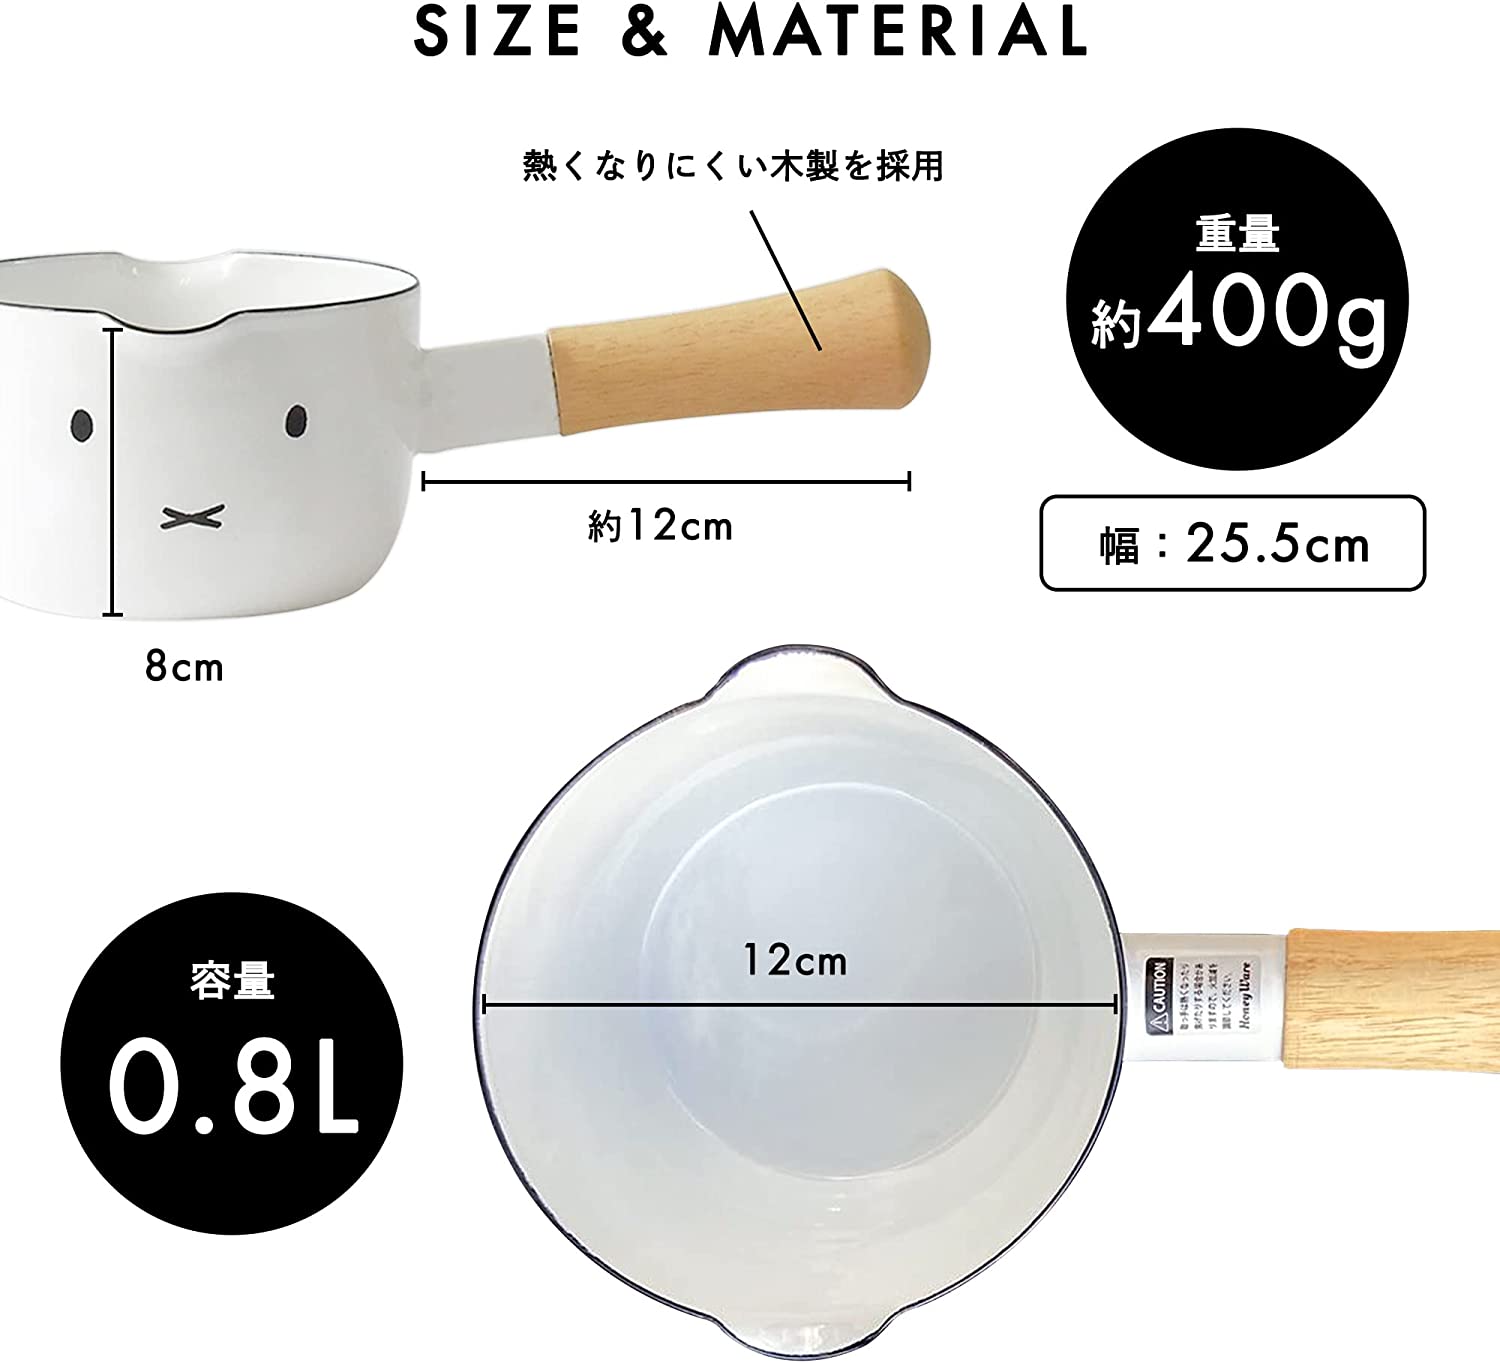 Miffy Enamel Baking Pan with Lid - Set of 2 – MoMA Design Store